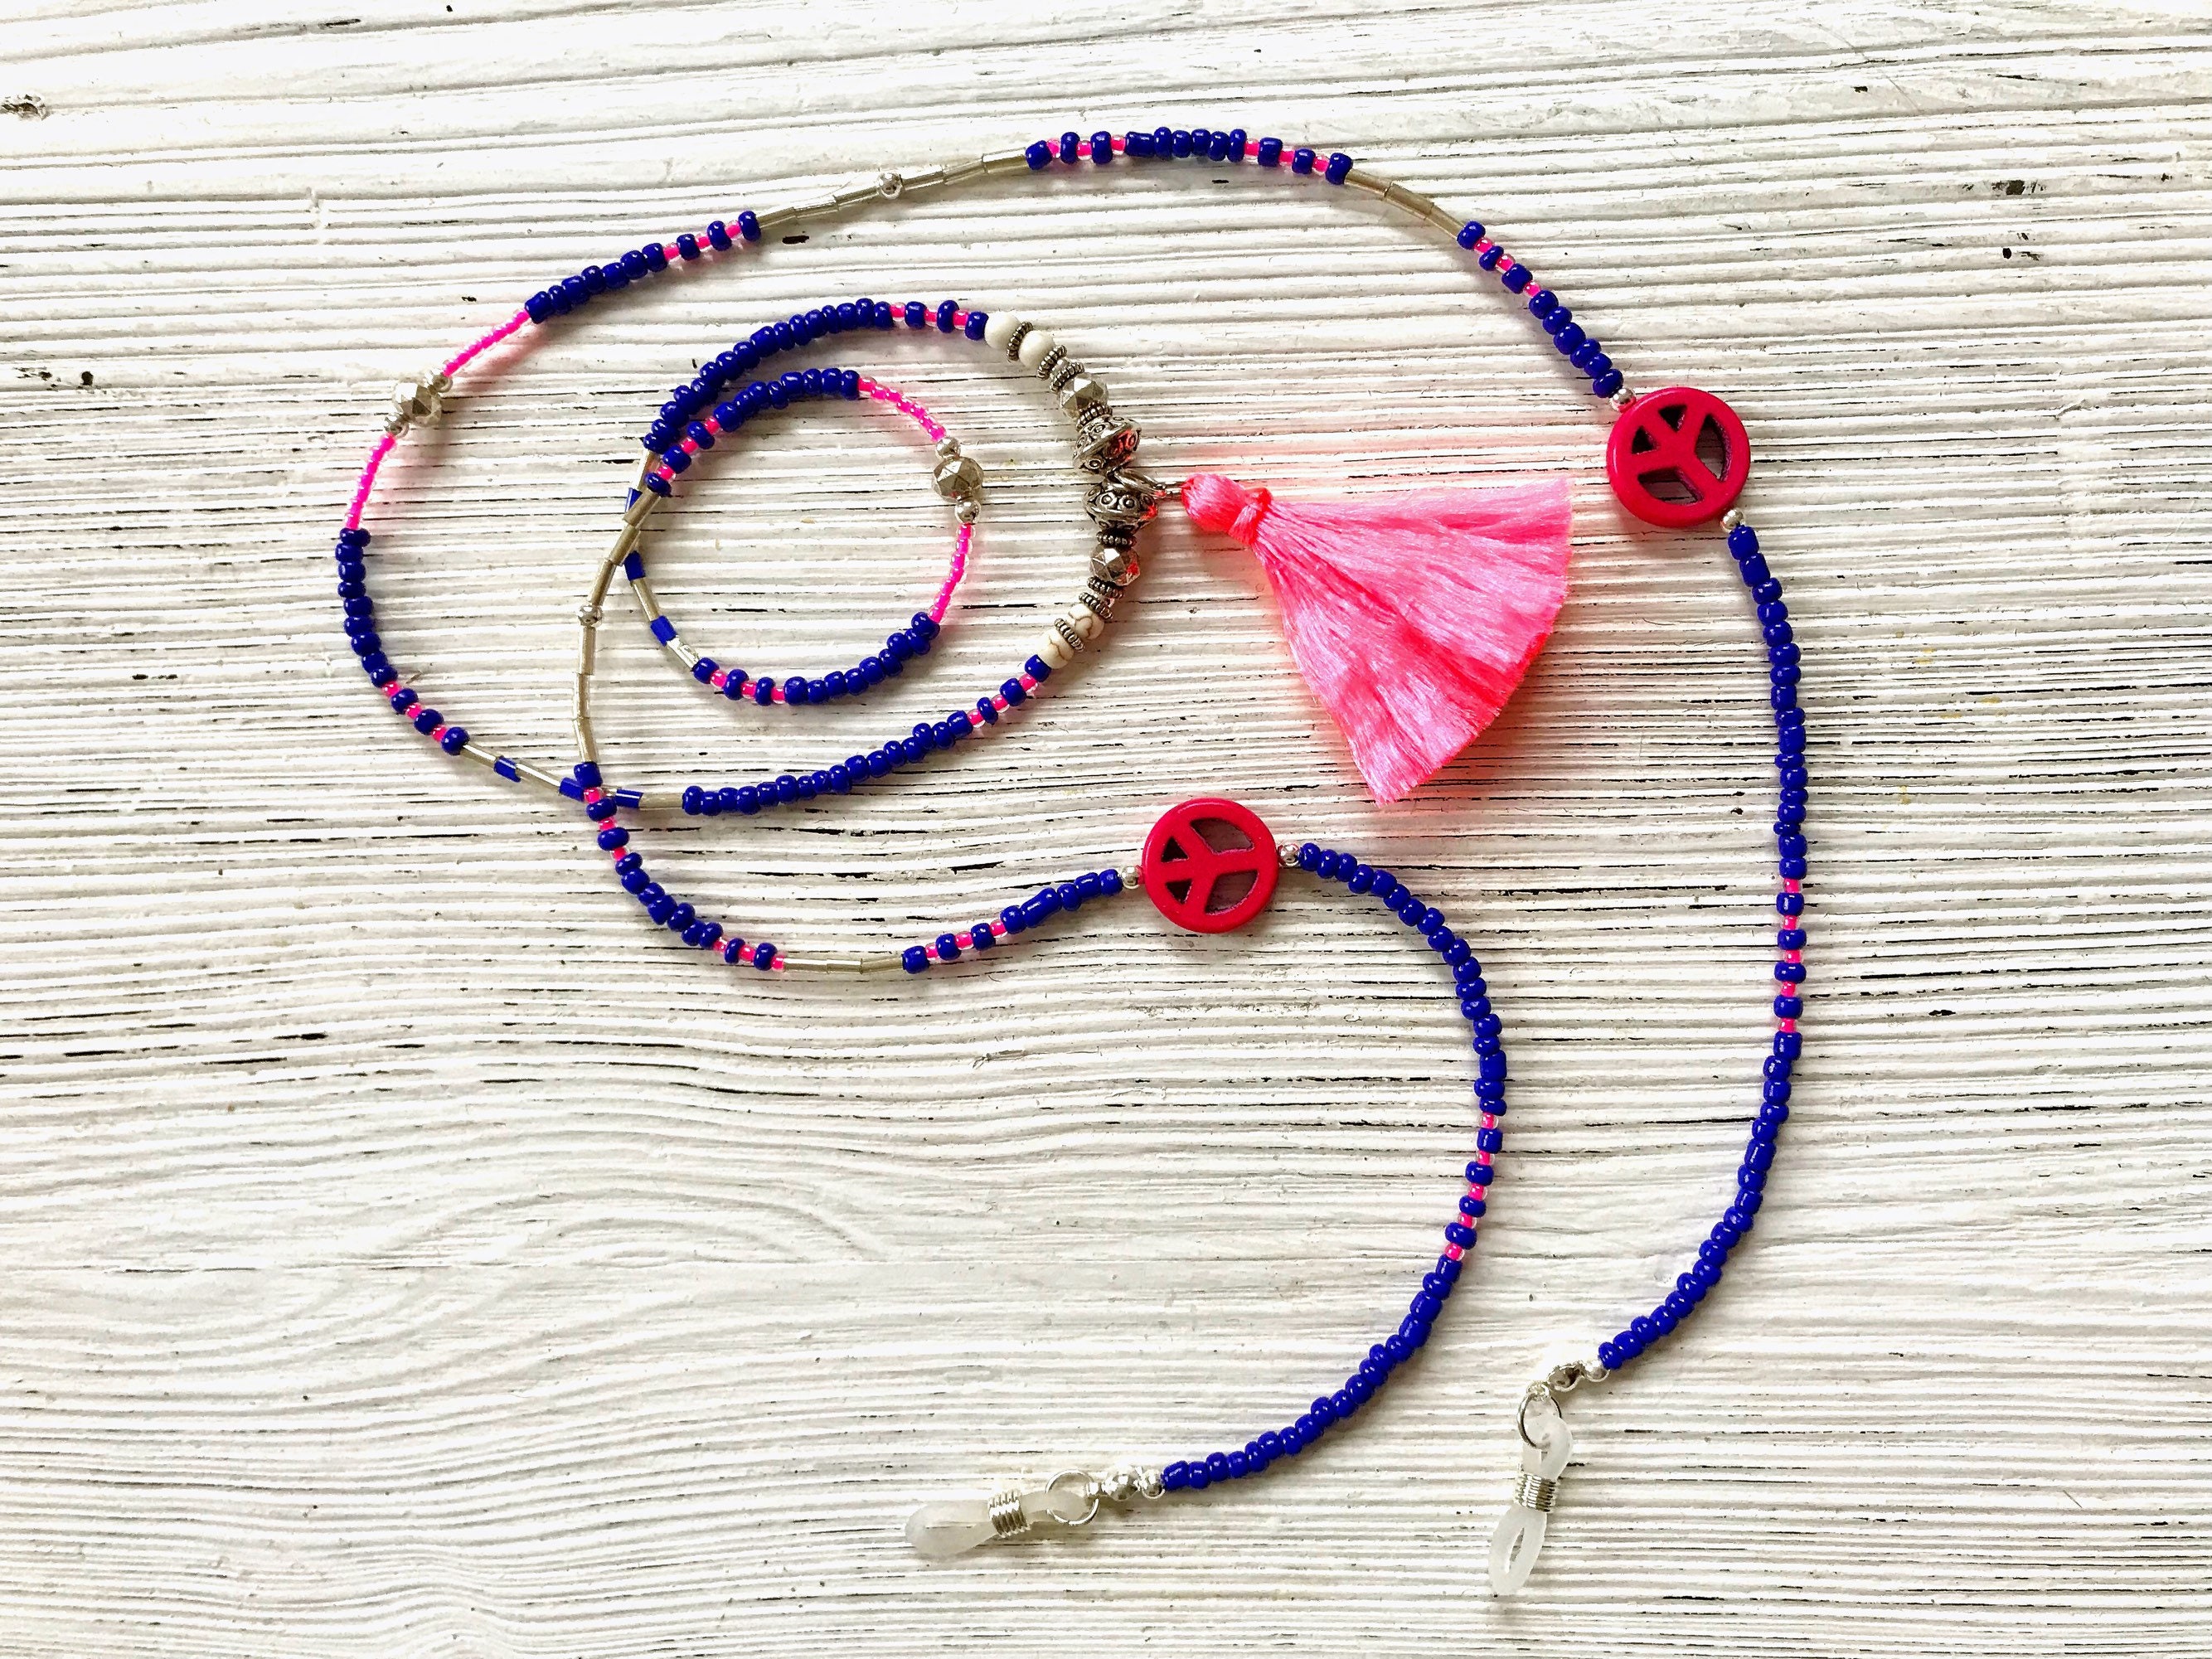 Boho Peace Sunglasses Necklace Neon Pink | Etsy